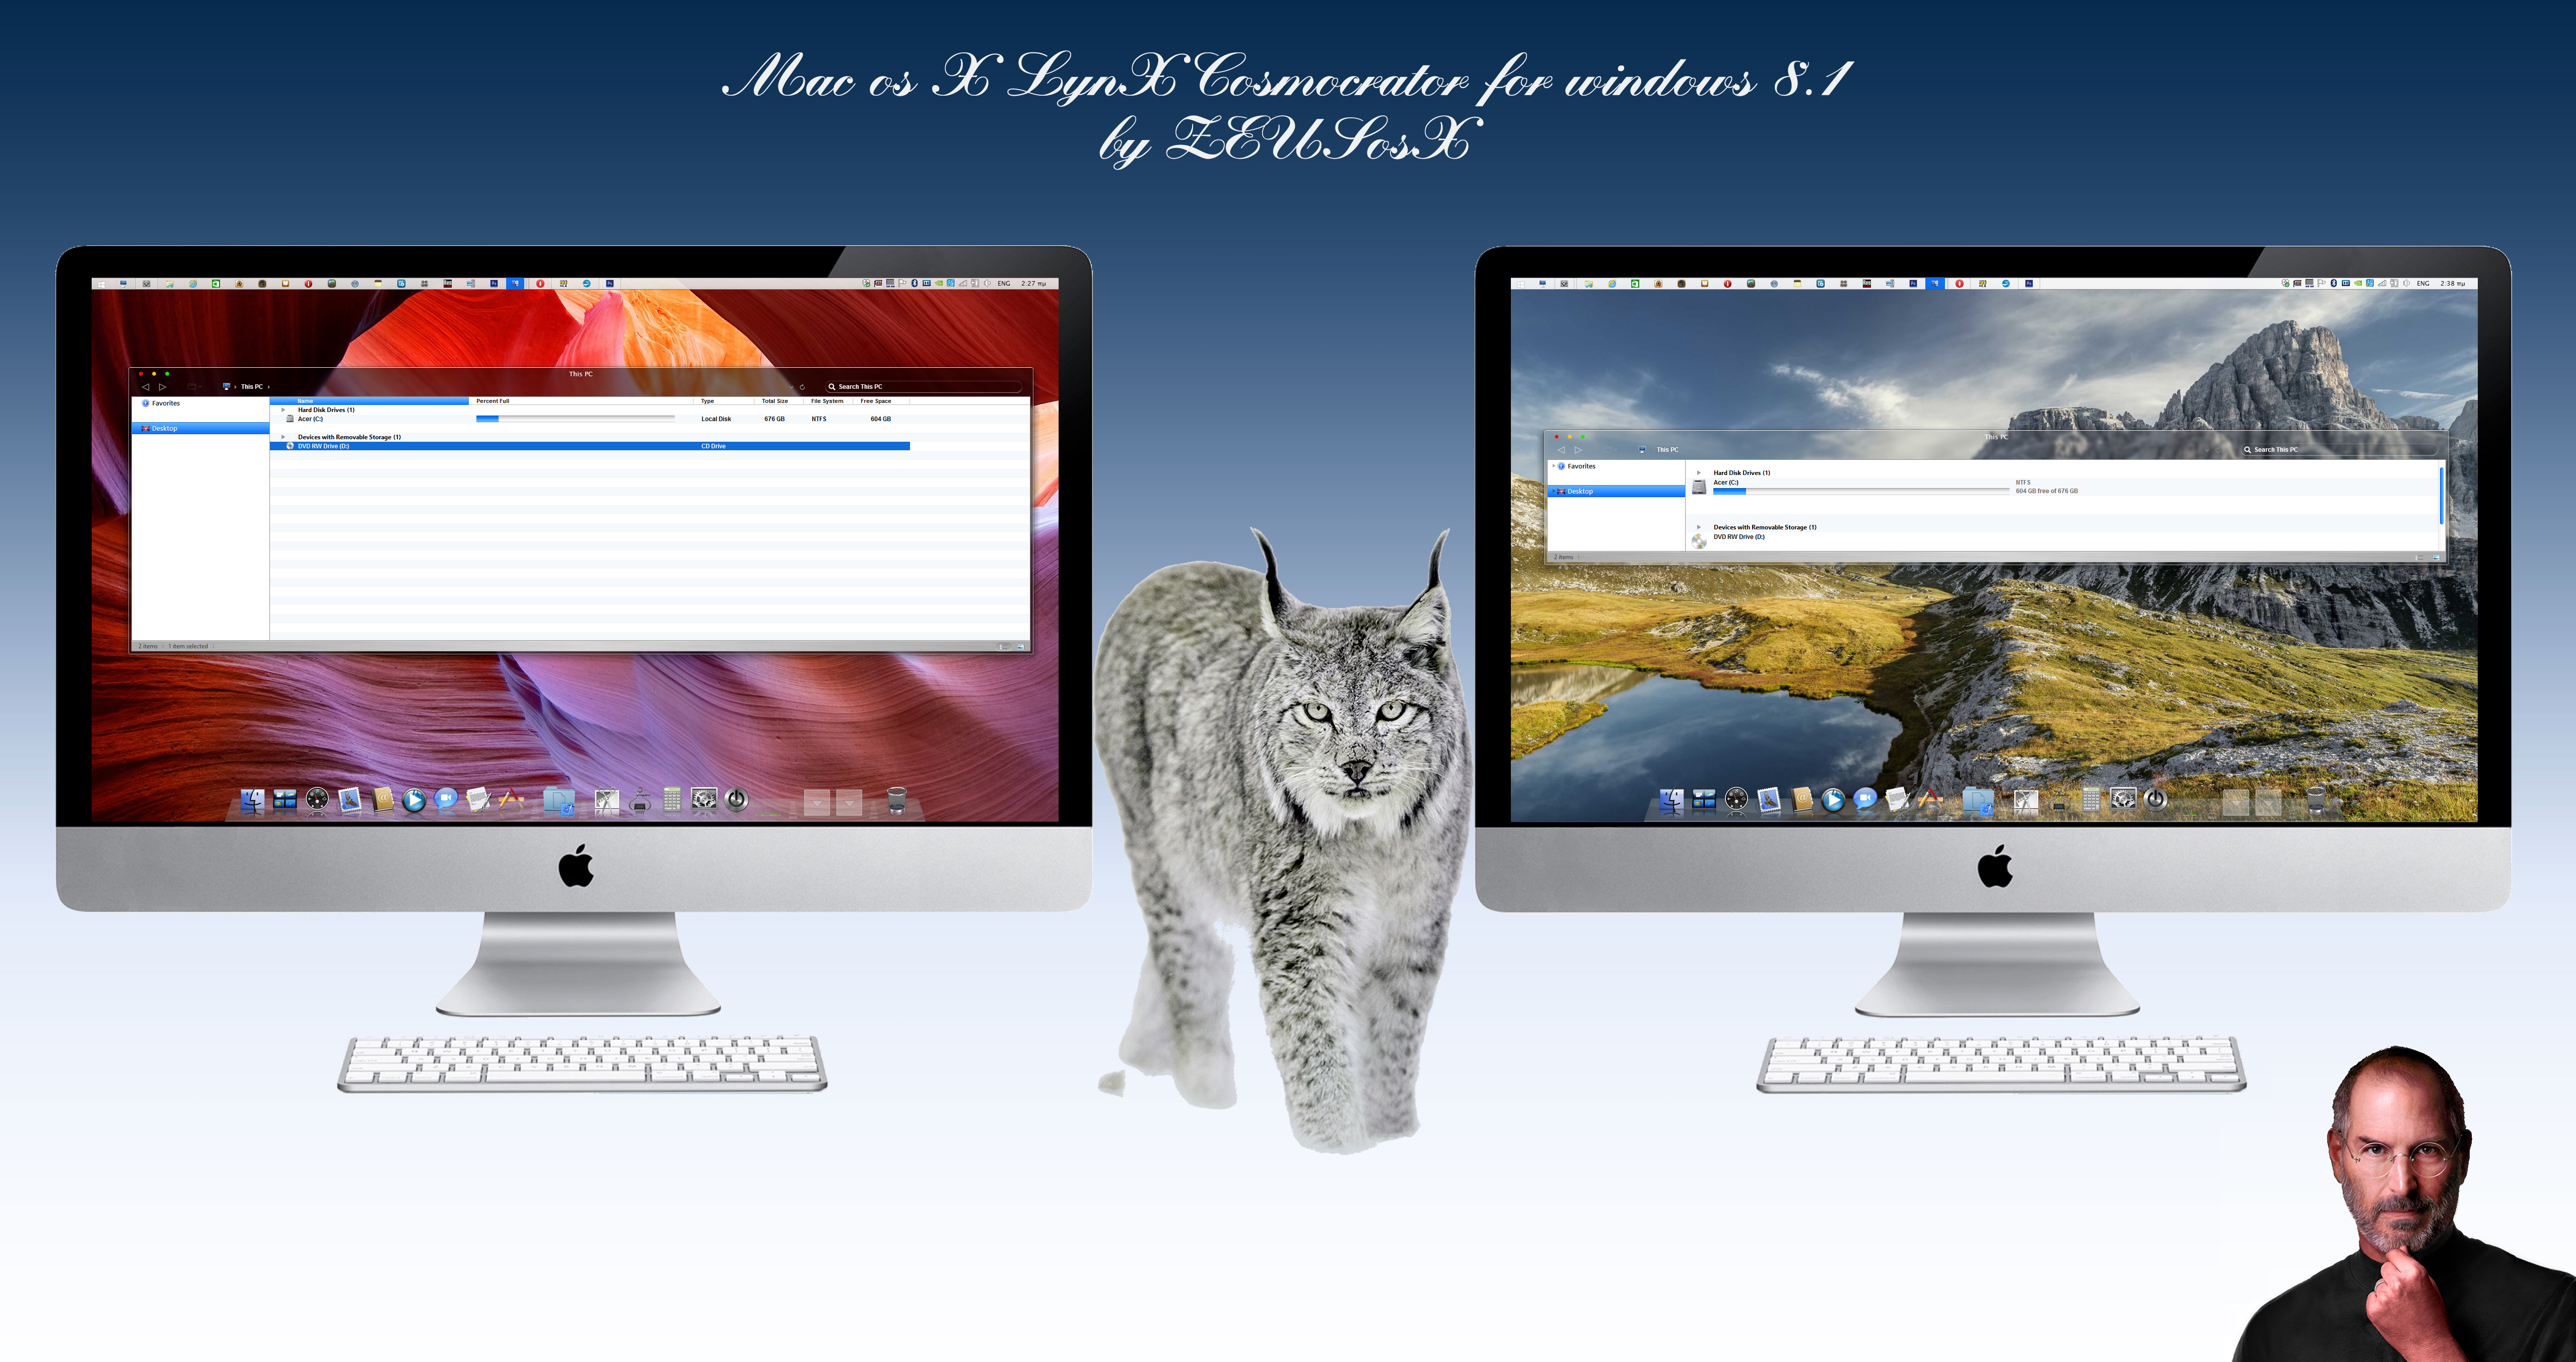 Apple Mac Theme For Windows 8